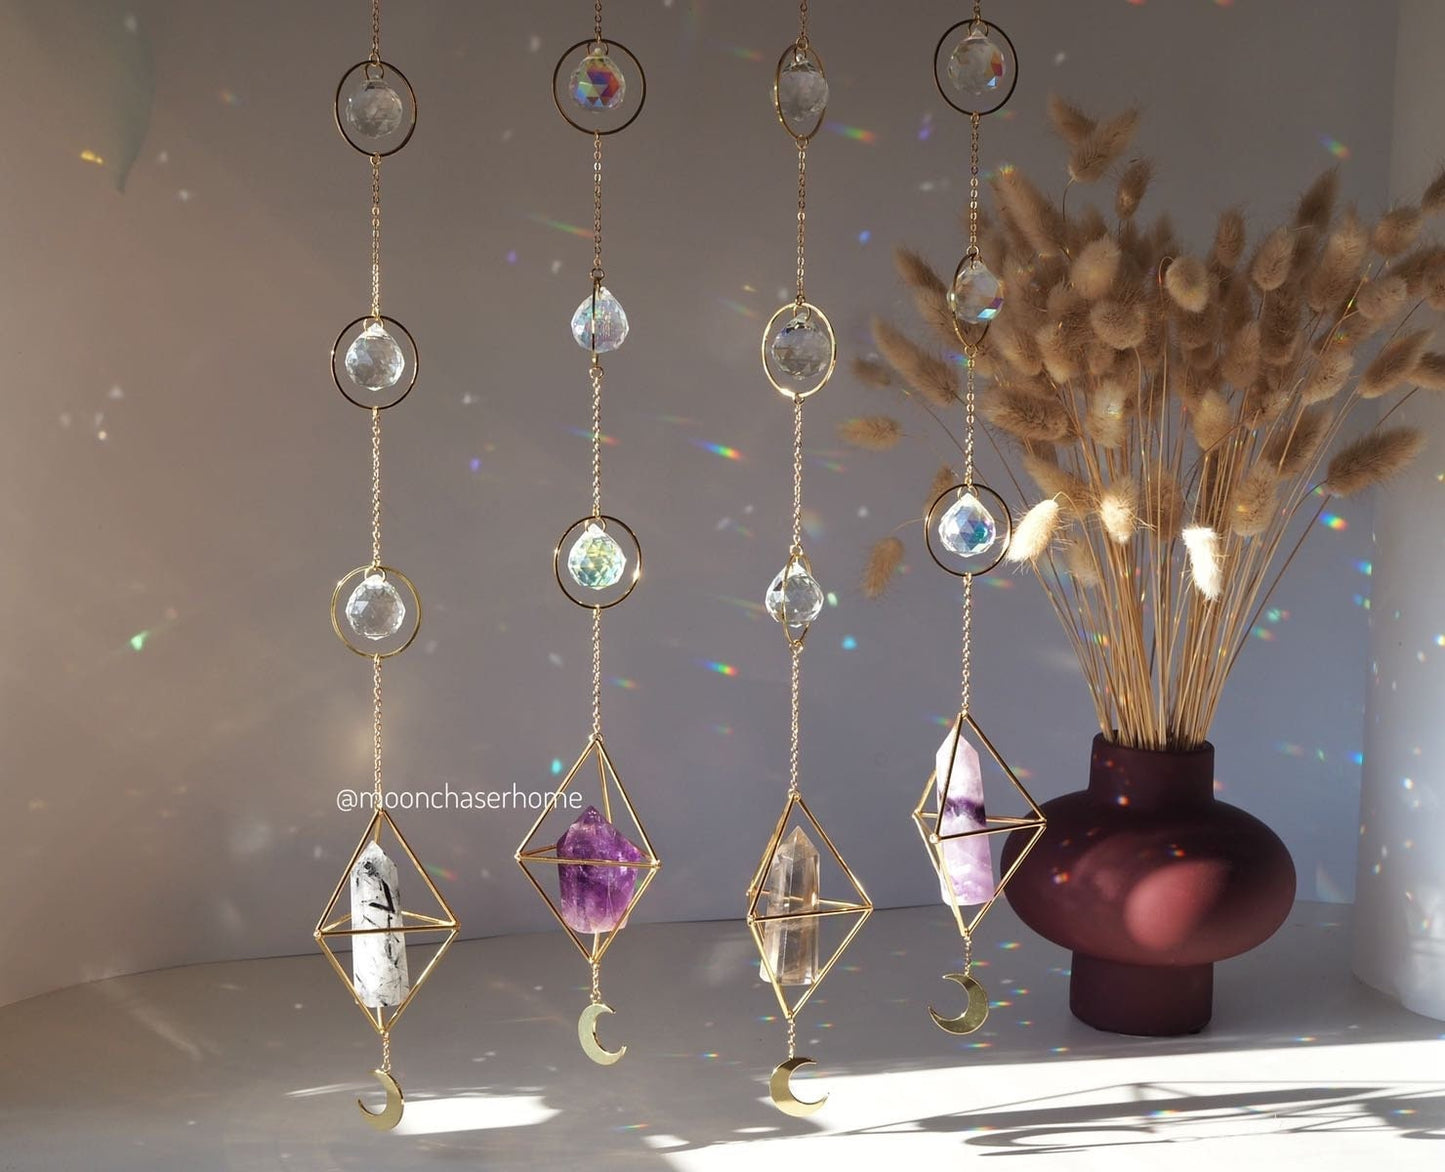 Leela long crystal sun catcher with moon pendant, rainbow prism, light maker, rainbow maker, geometric sun catcher